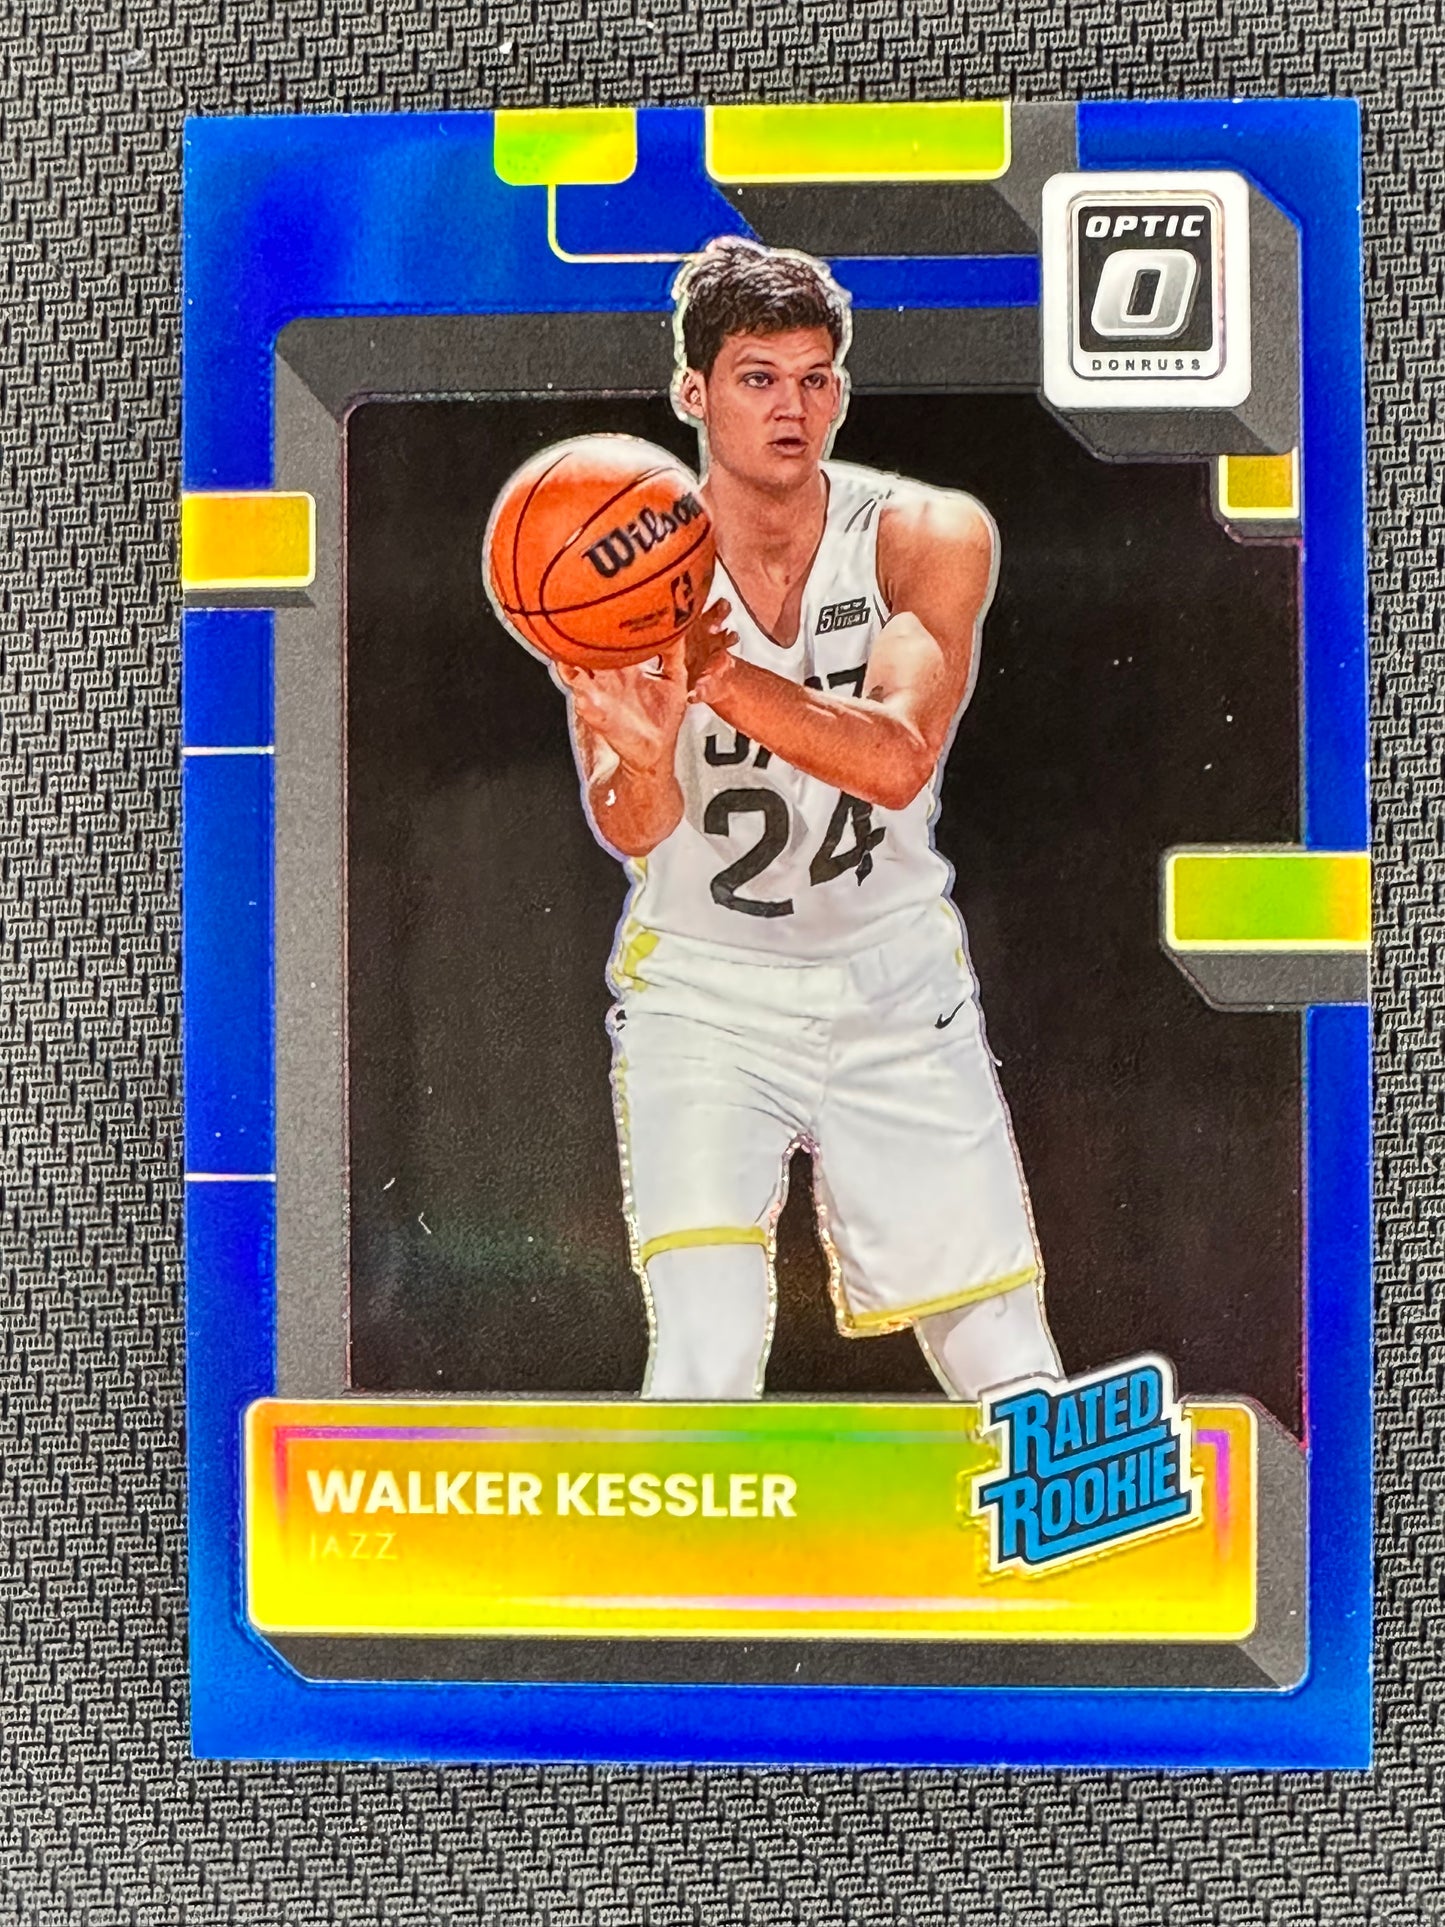 2022/23 Donruss Optic Rated Rookie #213 Walker Kessler Blue /49